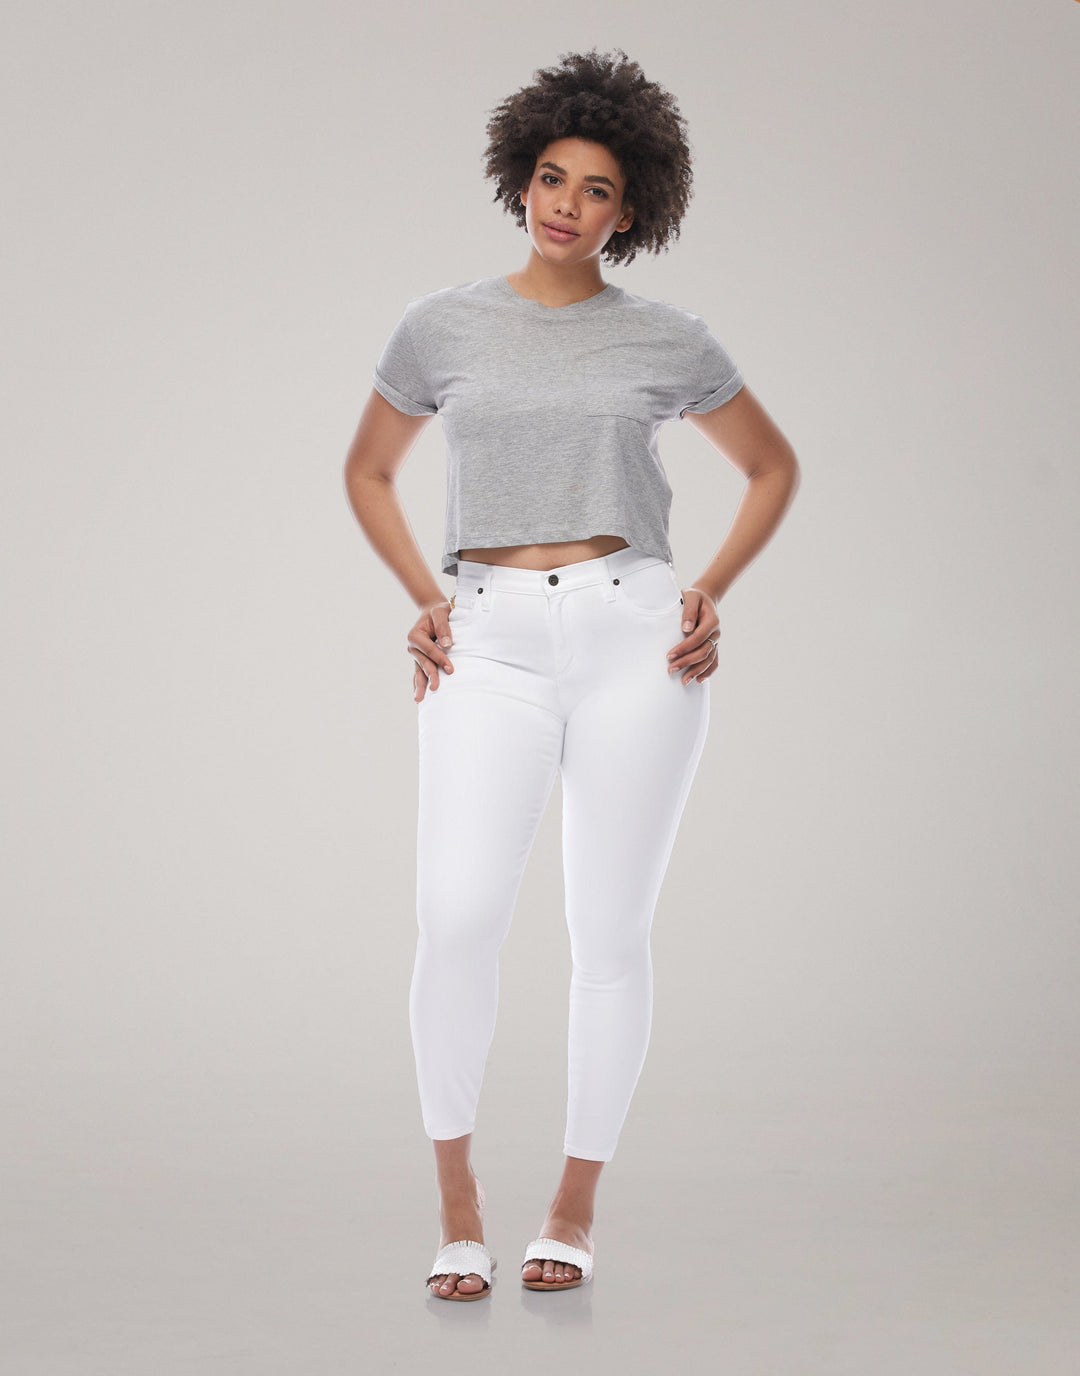 Yoga Jeans Rachel Classic Rise Skinny Jean - White * Last Chance